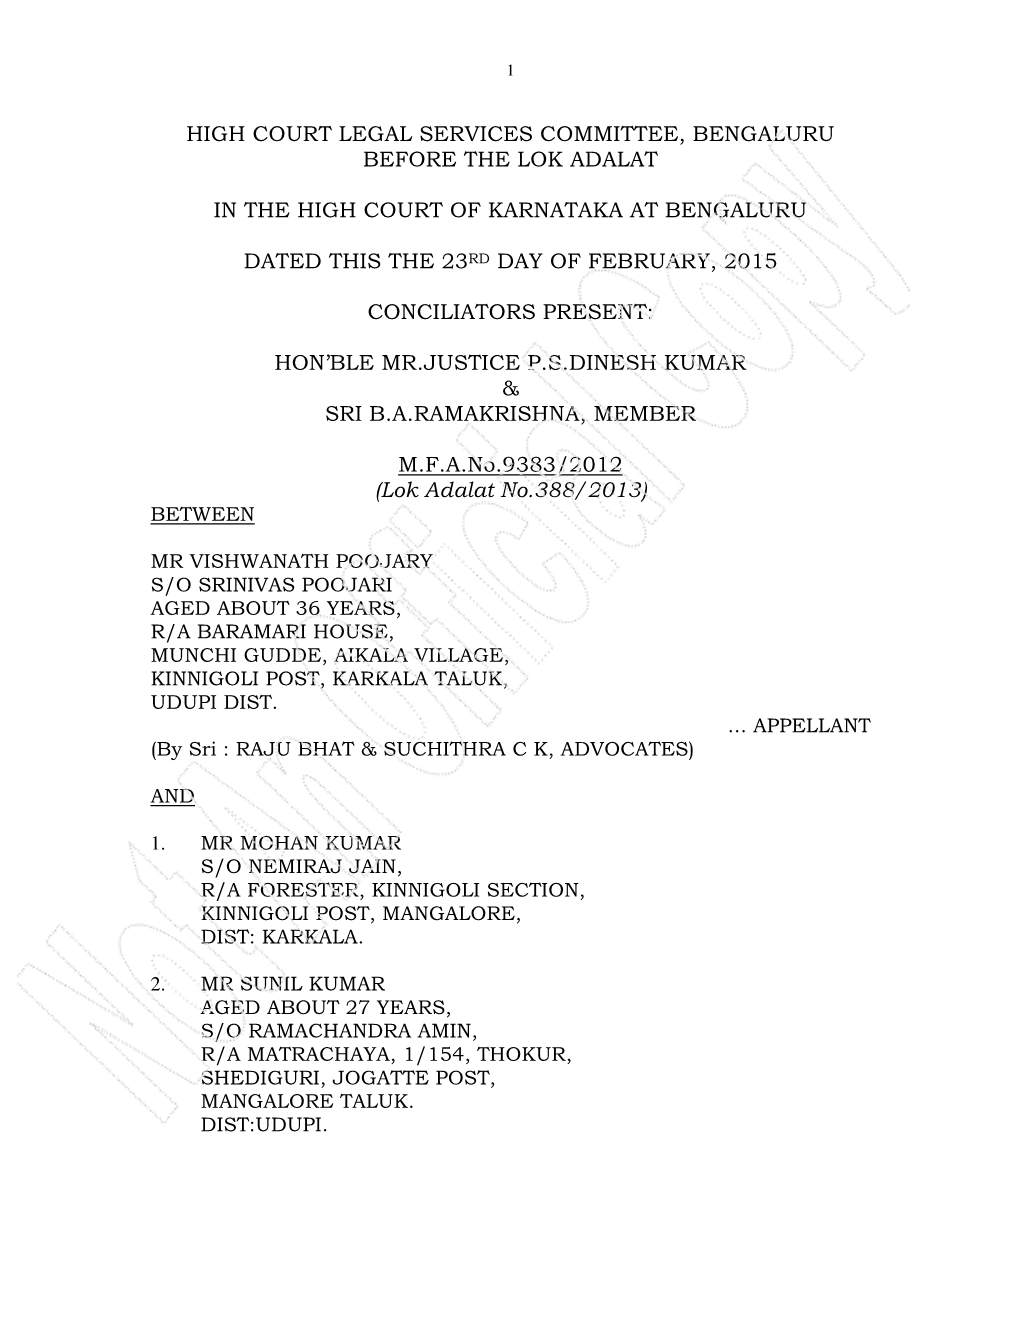 High Court Legal Services Committee, Bengaluru Before the Lok Adalat